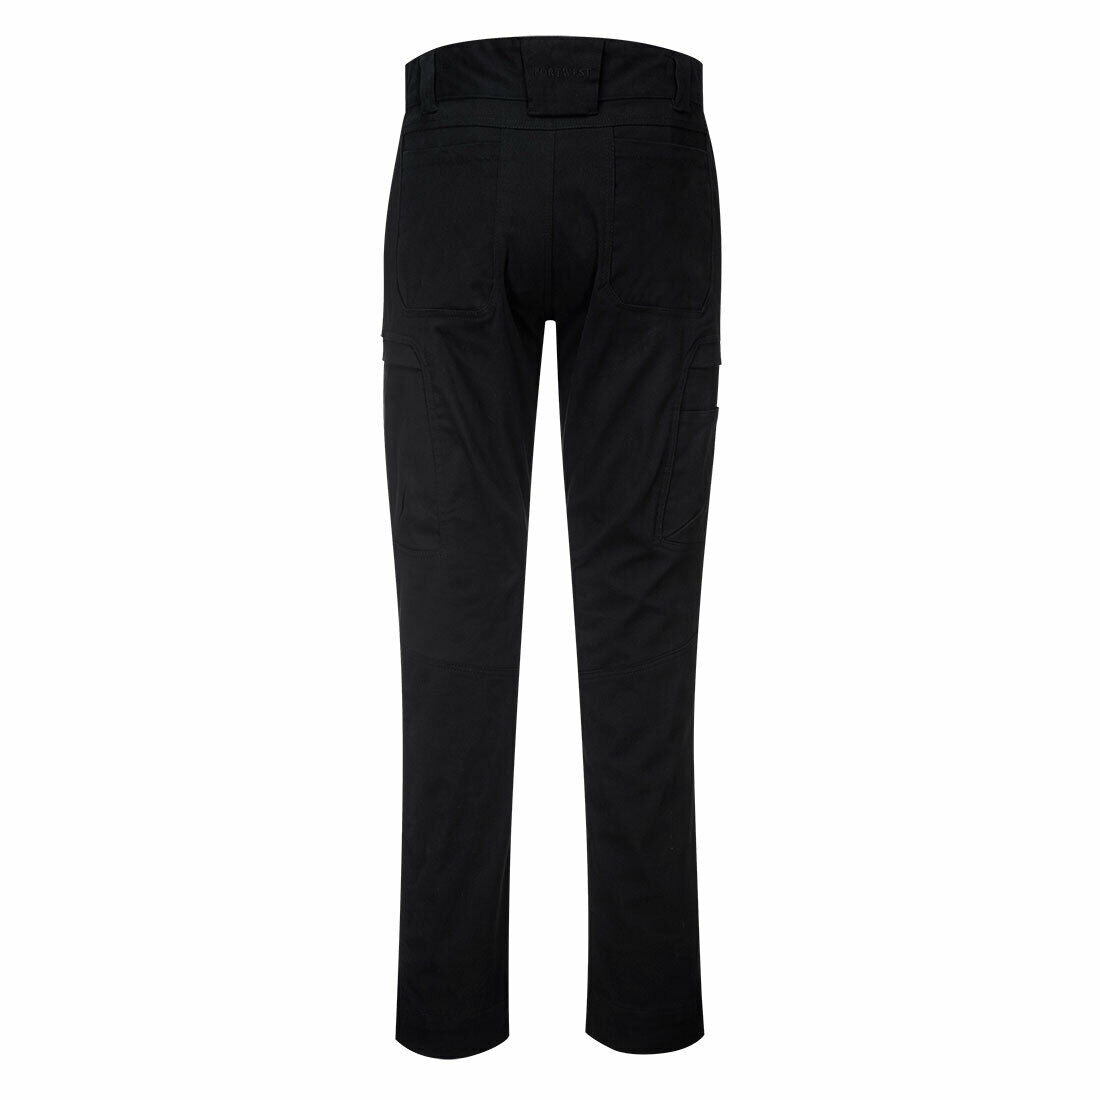 Portwest Mens KX3 Cargo Pants Trouser Slim Fitting Work Cotton Stretch T801-Collins Clothing Co